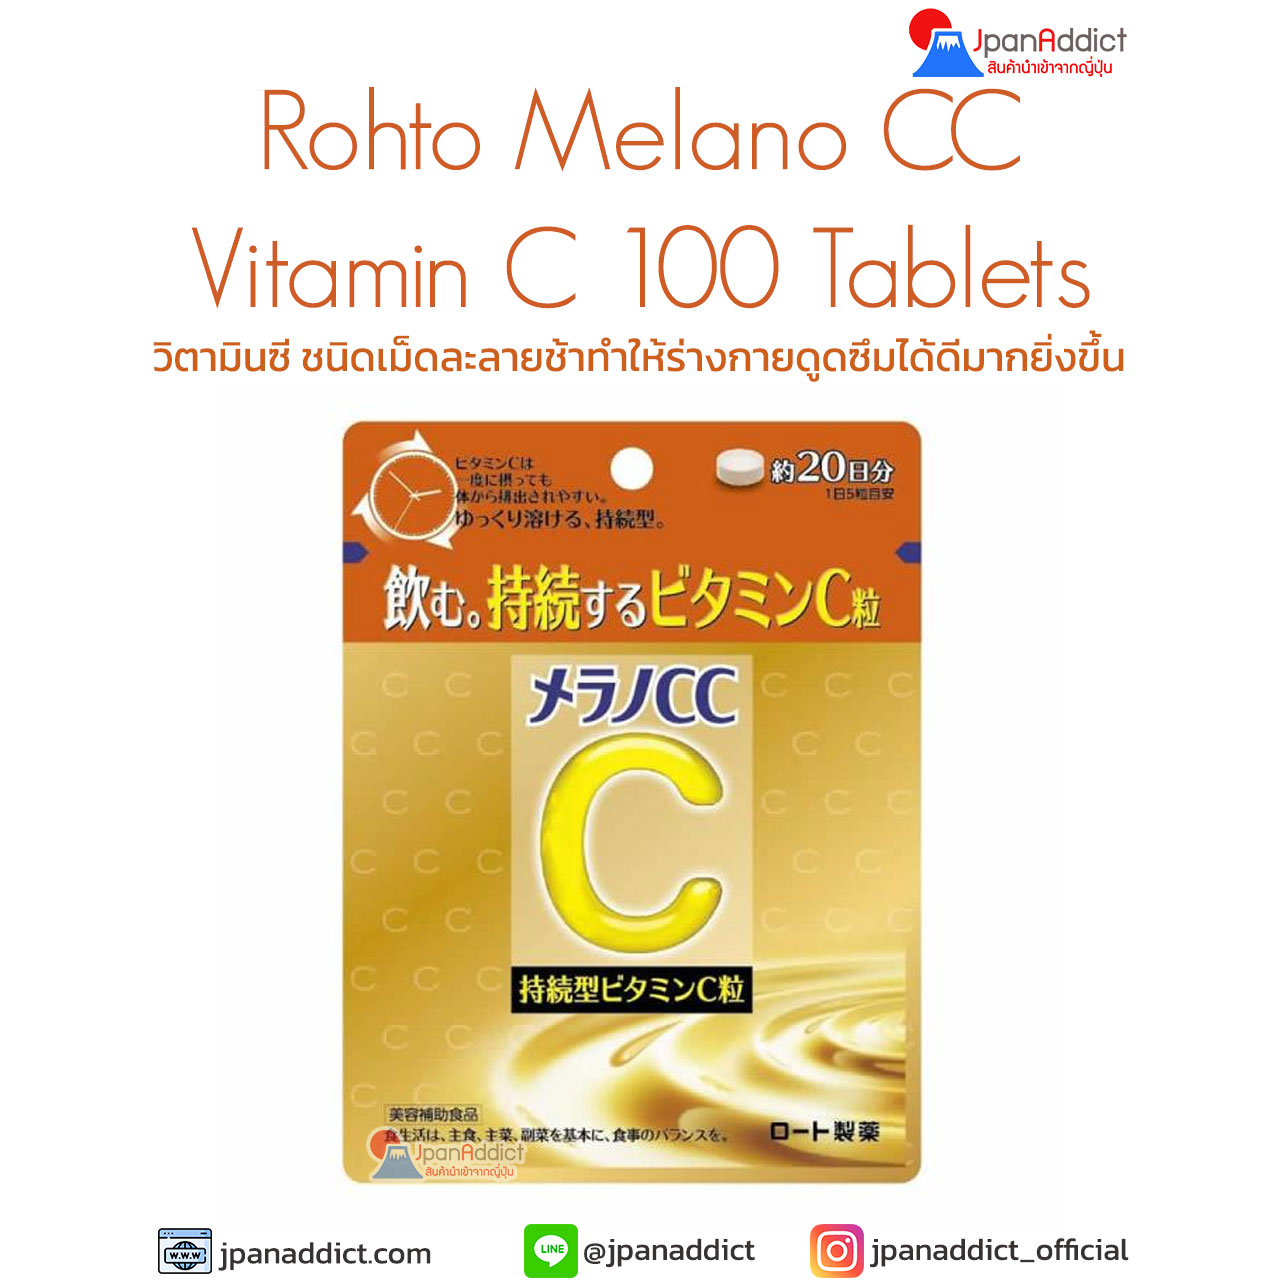 Rohto Melano CC Sustained Vitamin C 100 Tablets วิตามินซี ชนิดเม็ดละลายช้า